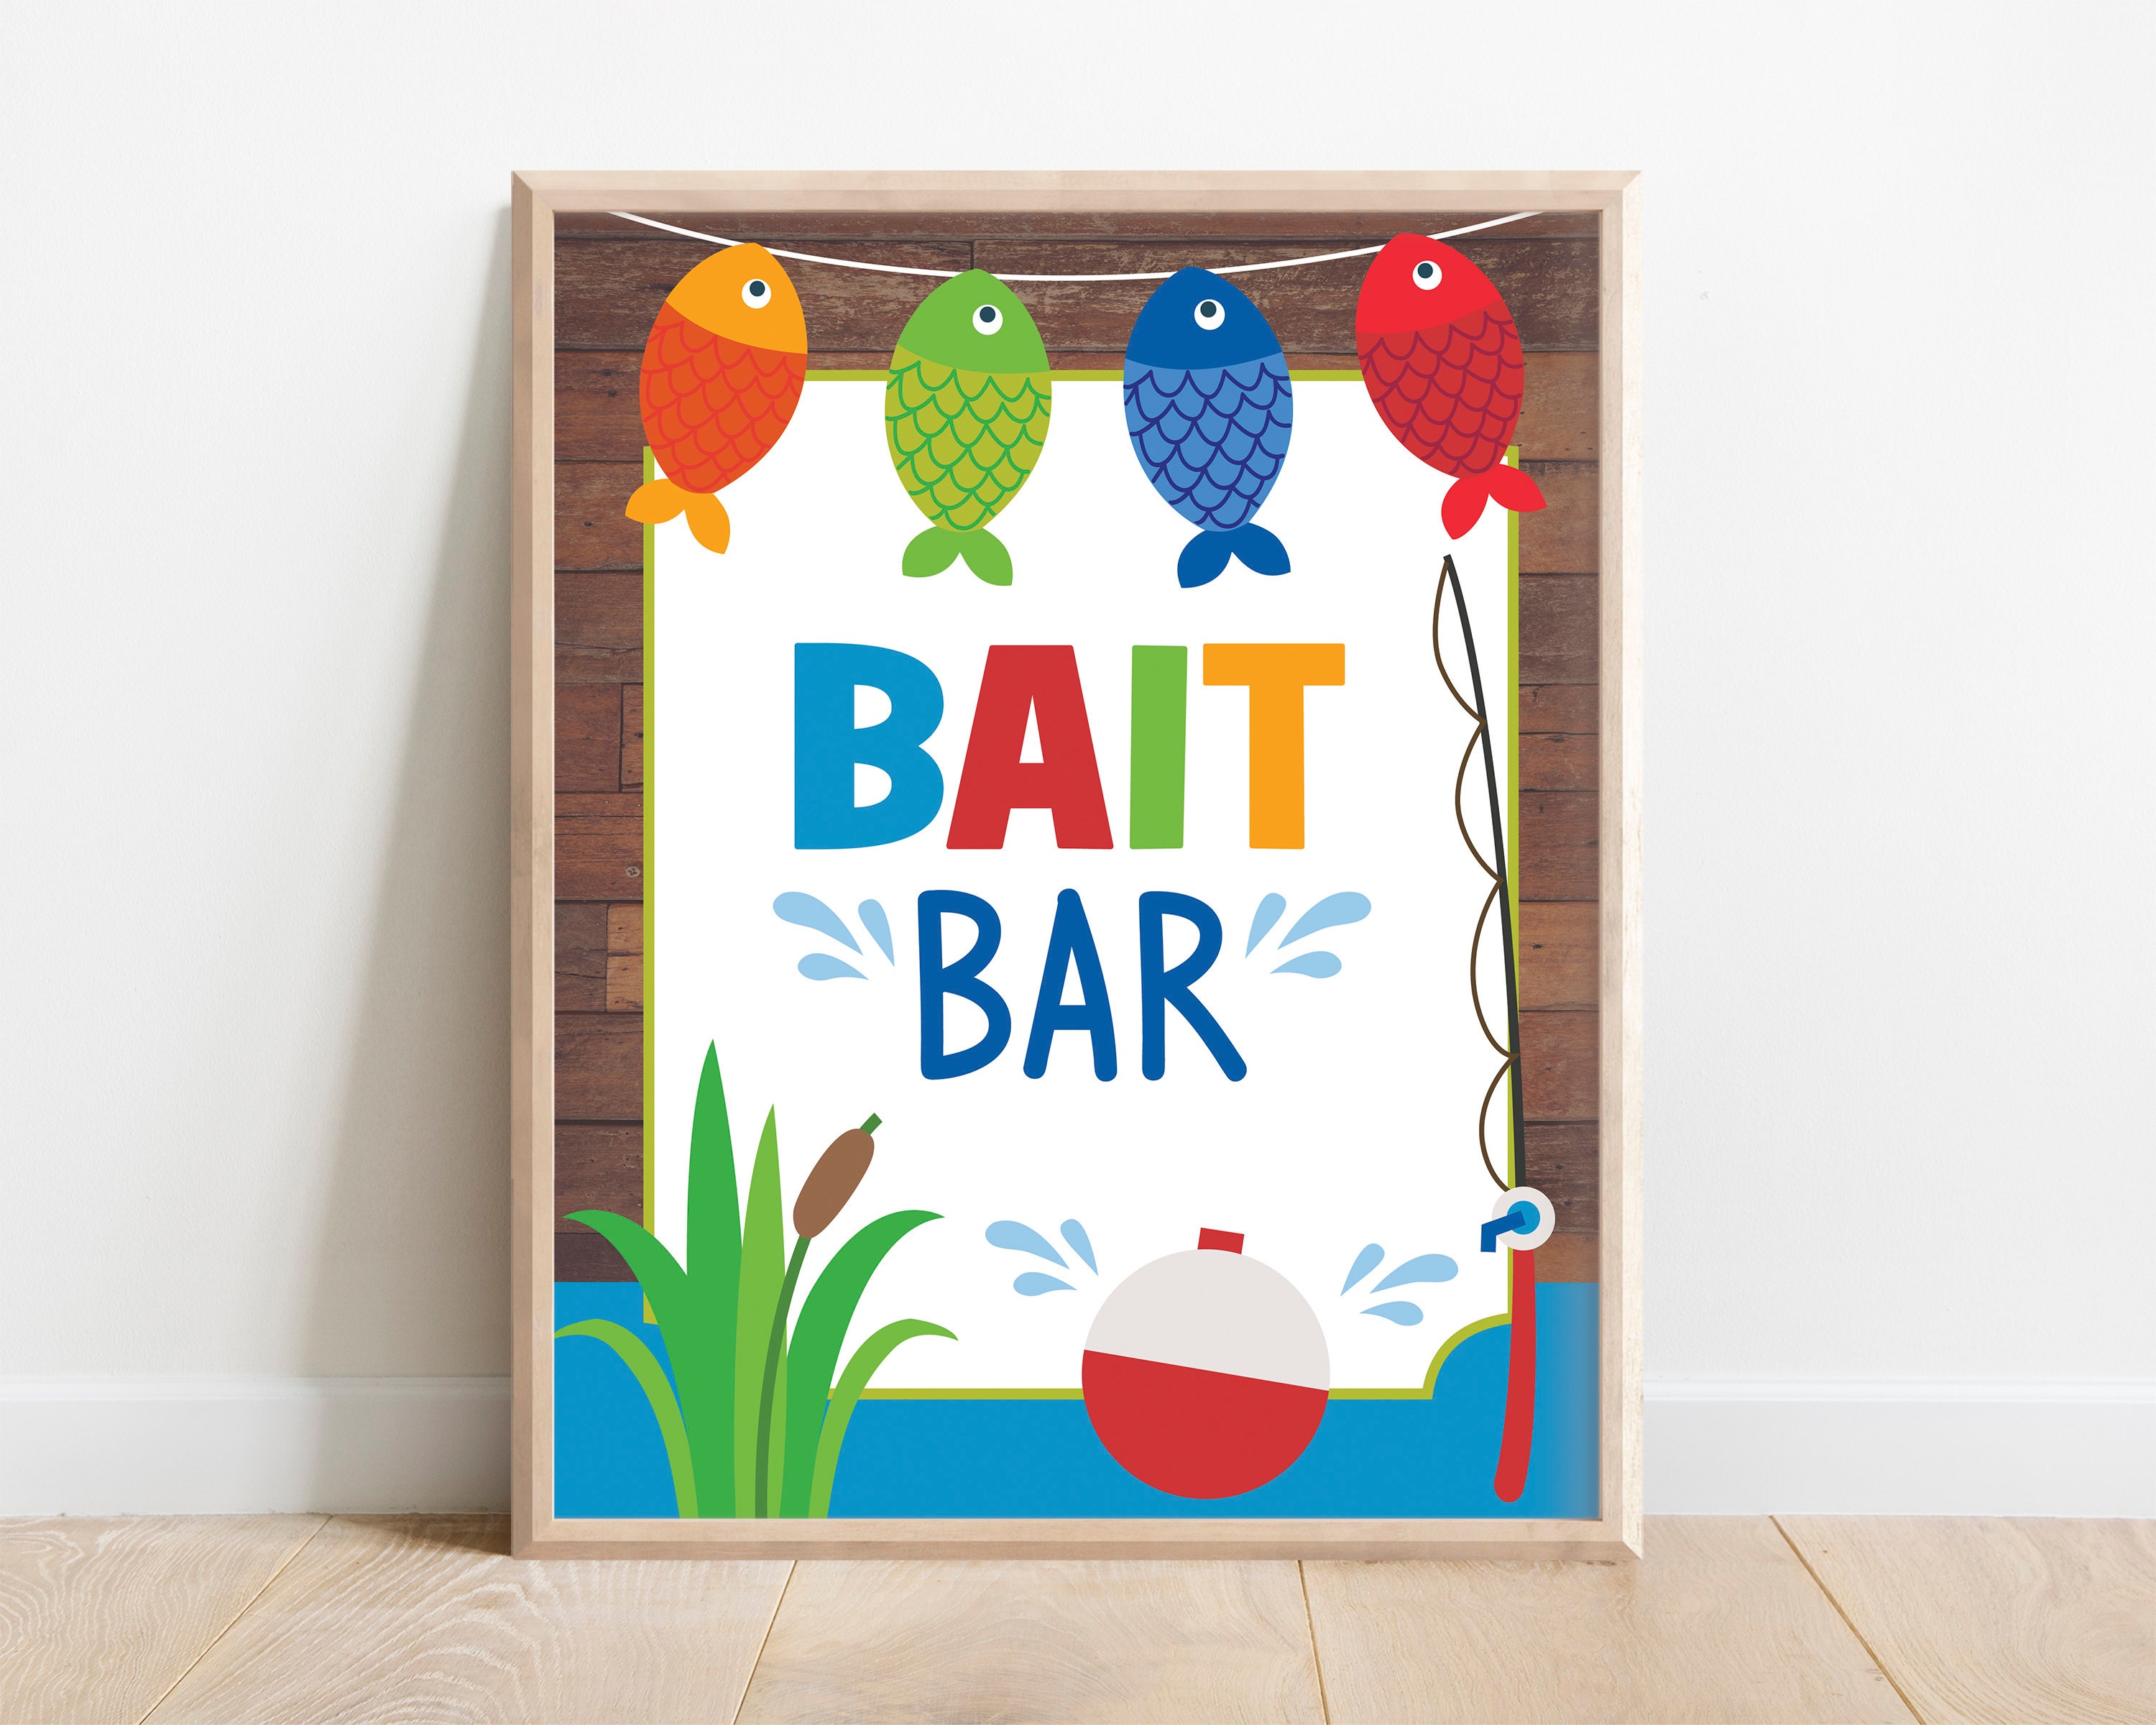 Bait bar sign for sale  